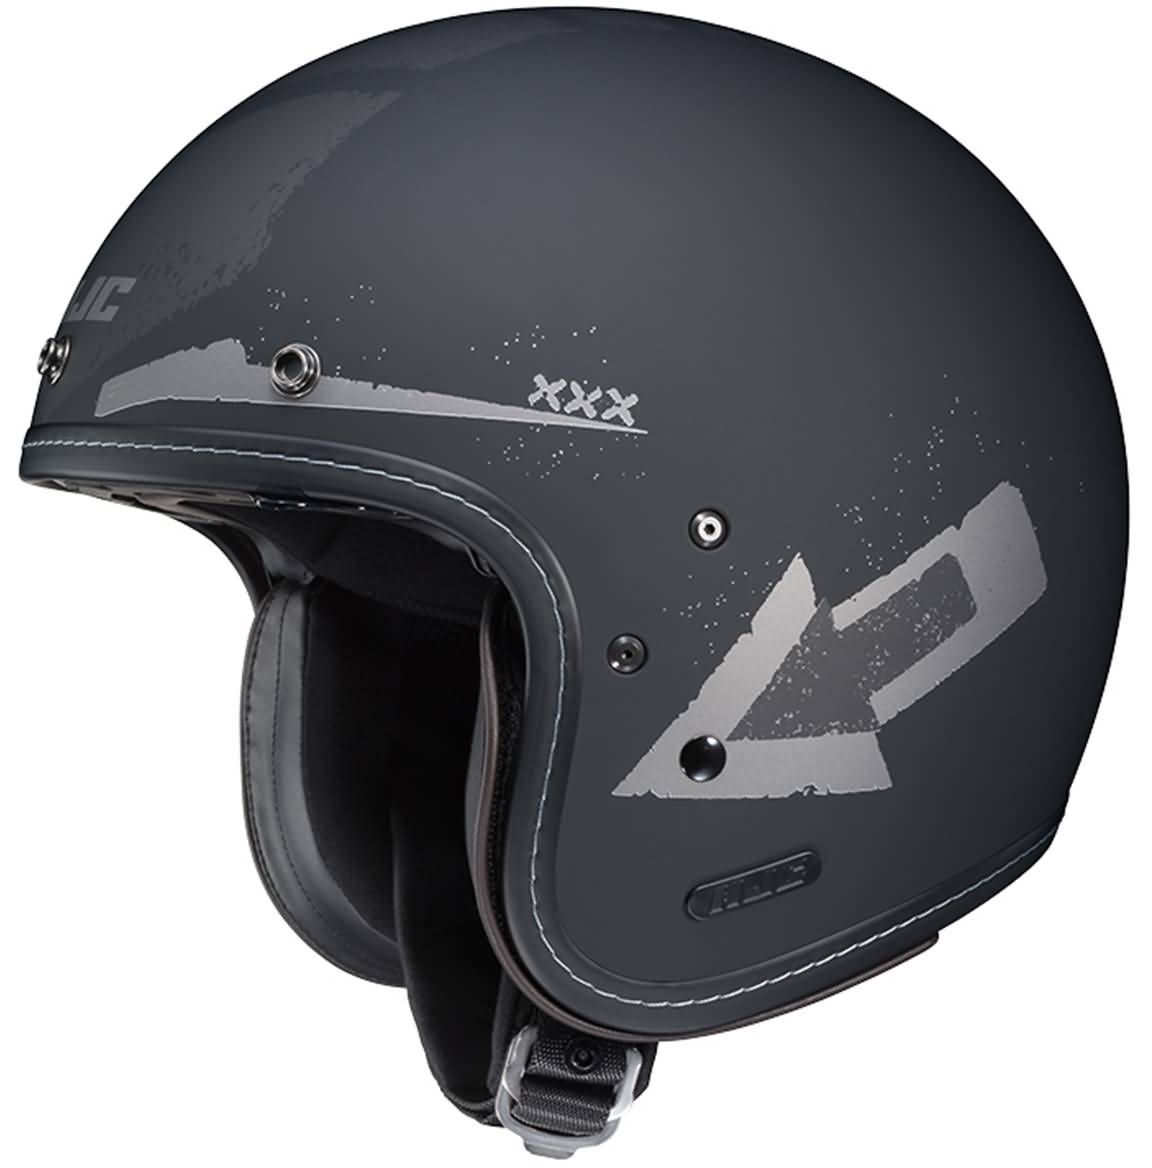 The HJC 2017 Street Helmet Collection